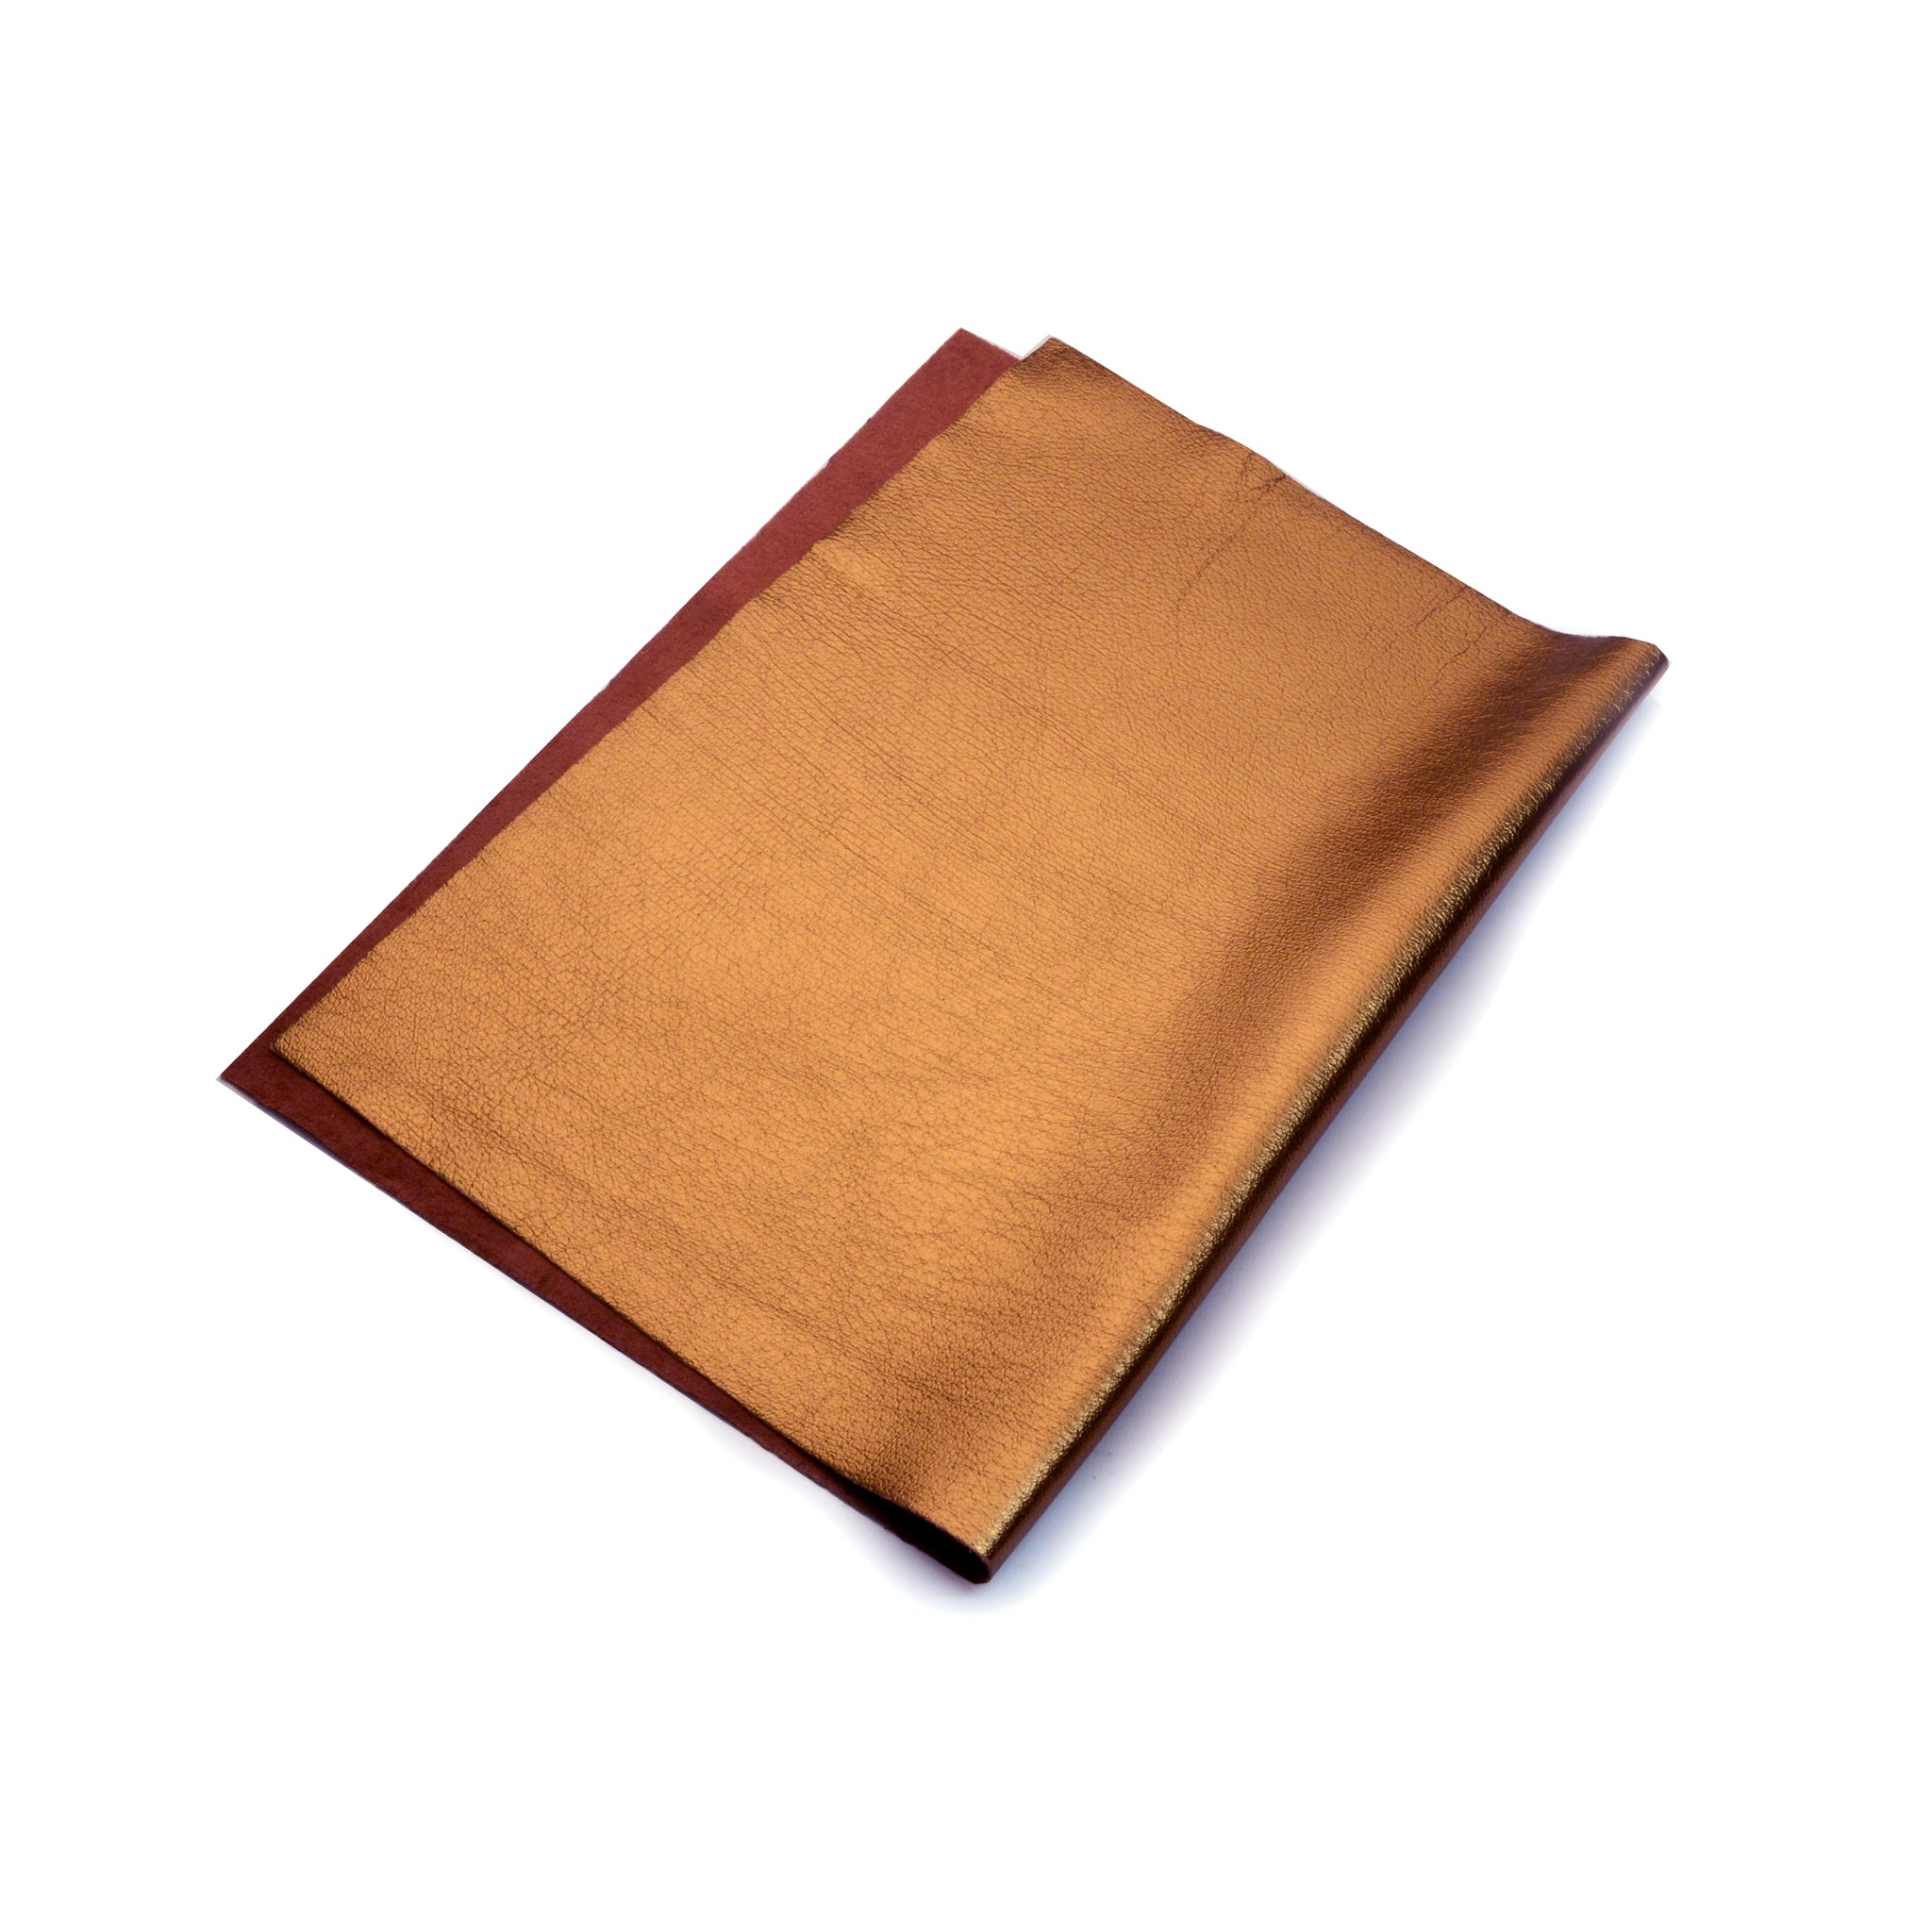 Copper Metallic Foil Leather